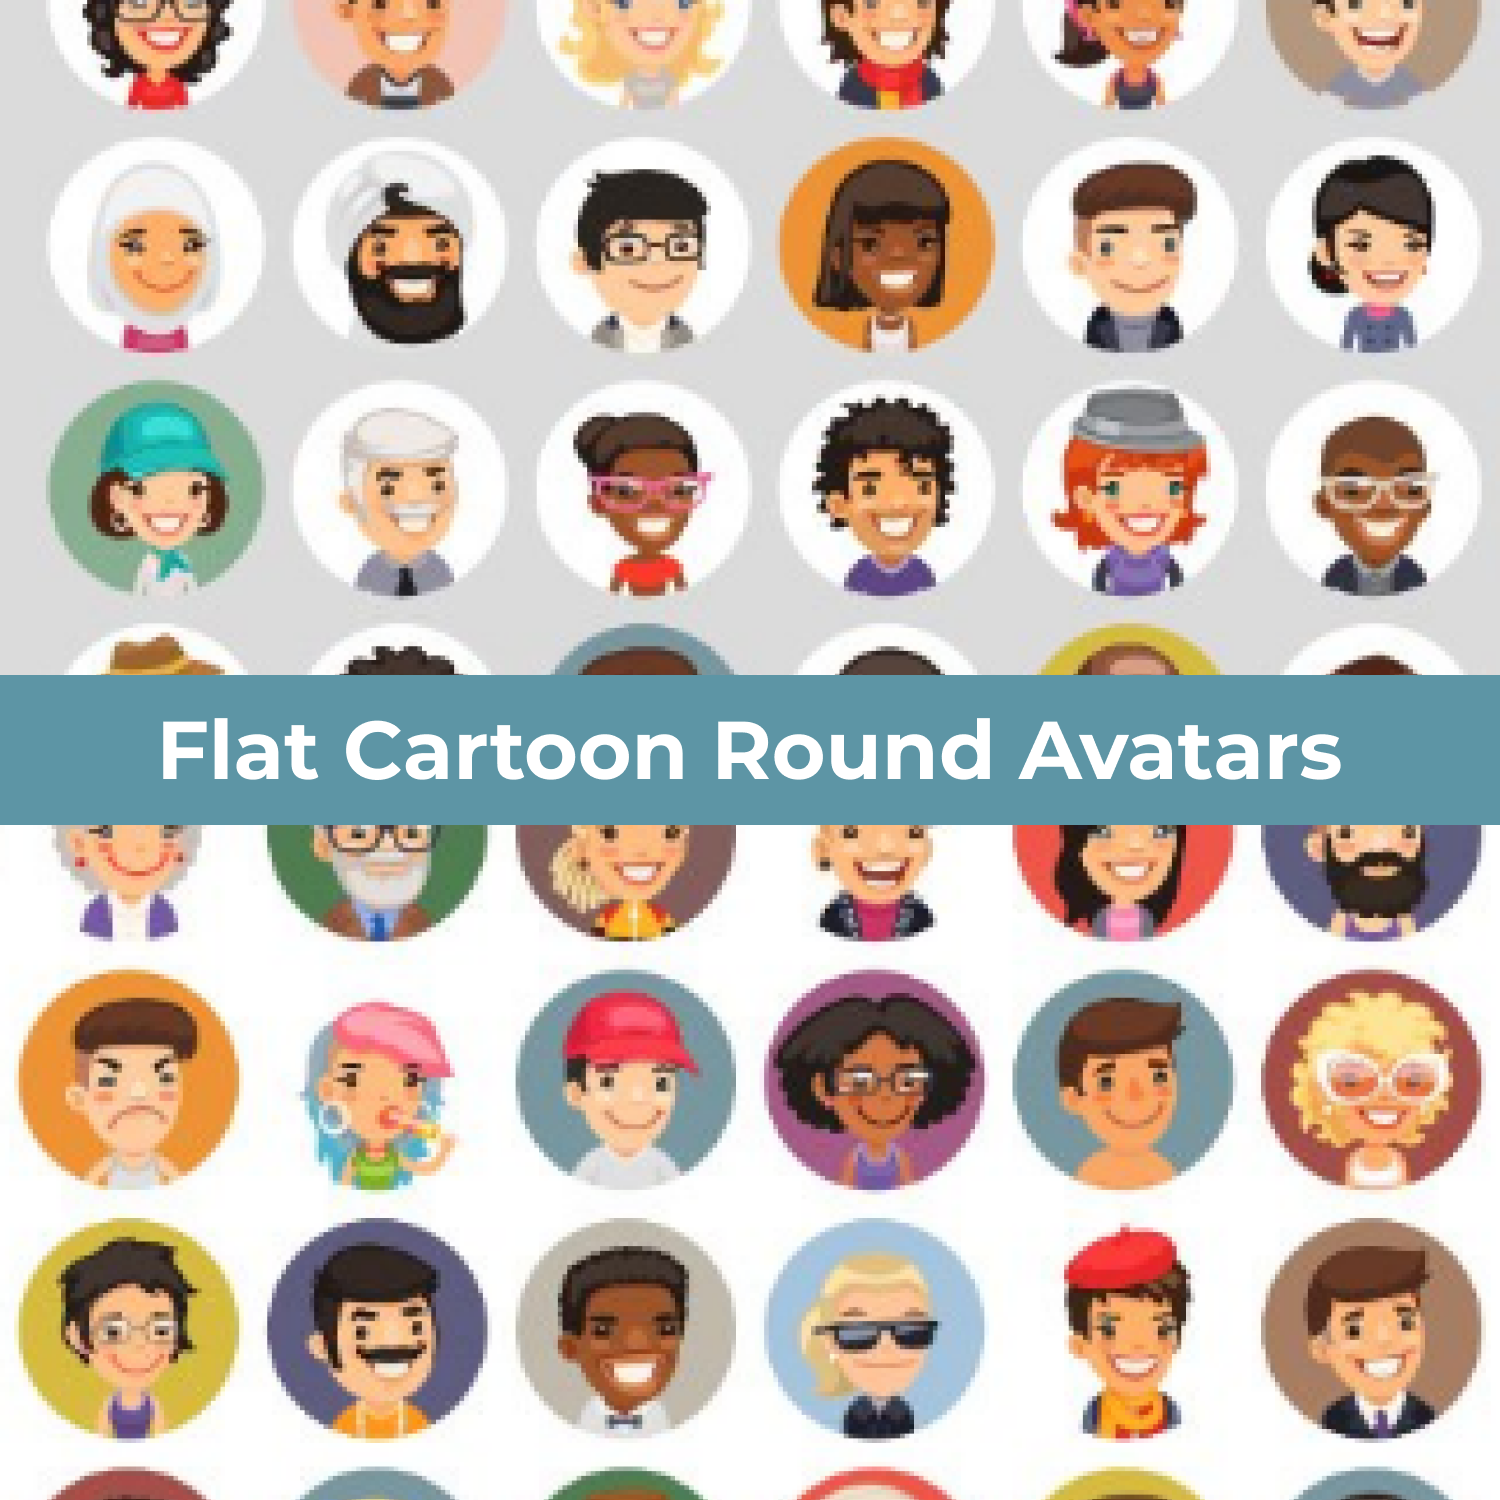 Flat Cartoon Round Avatars cover image.